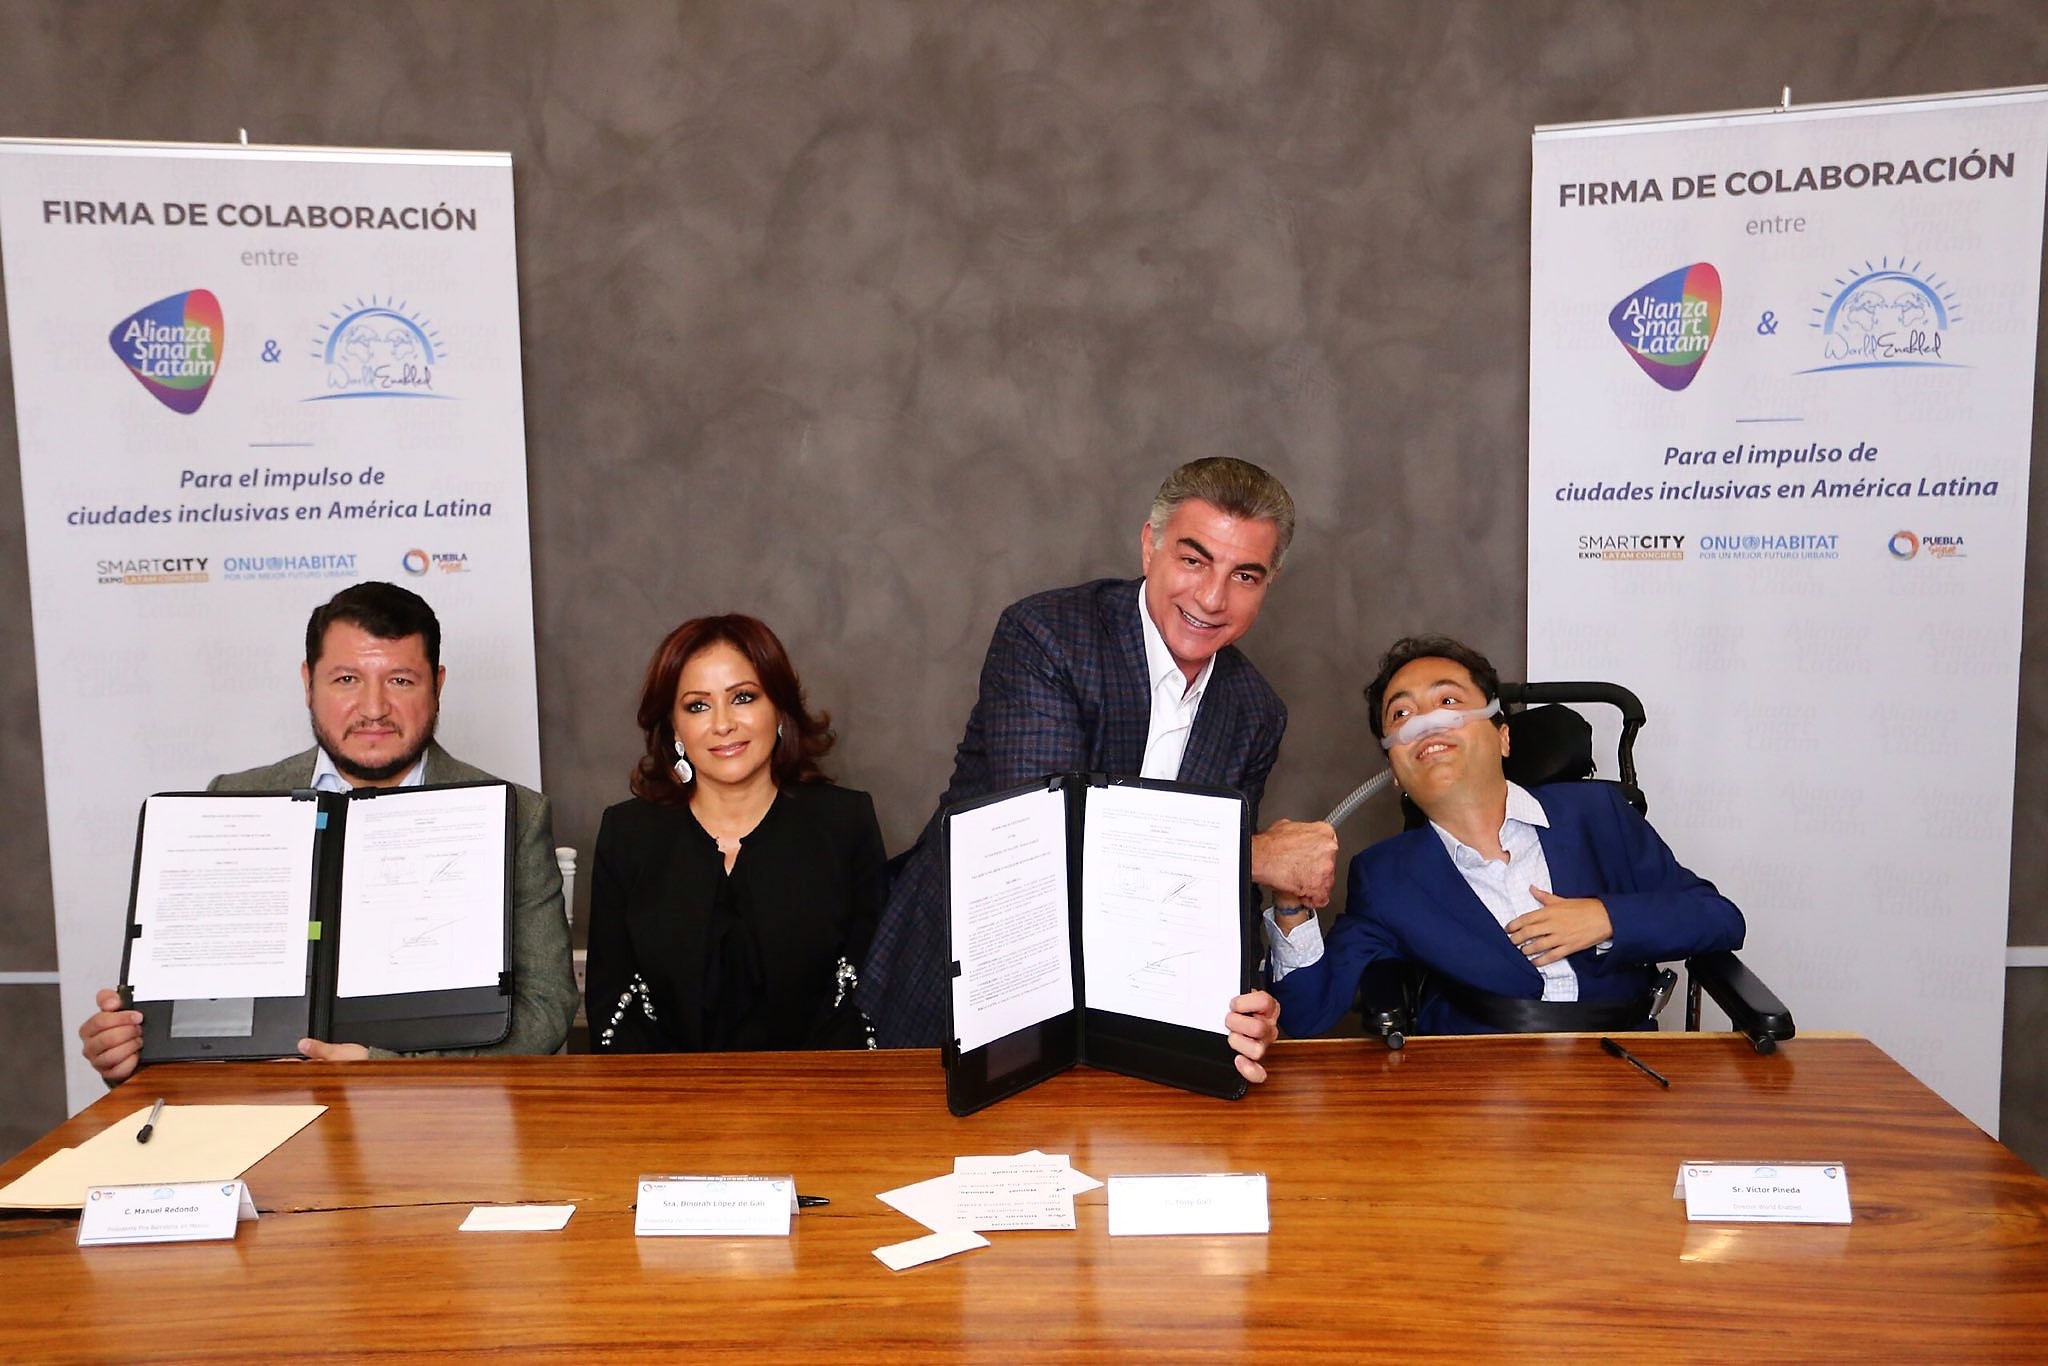 Firmado convenio para promover ciudades inclusivas en América Latina